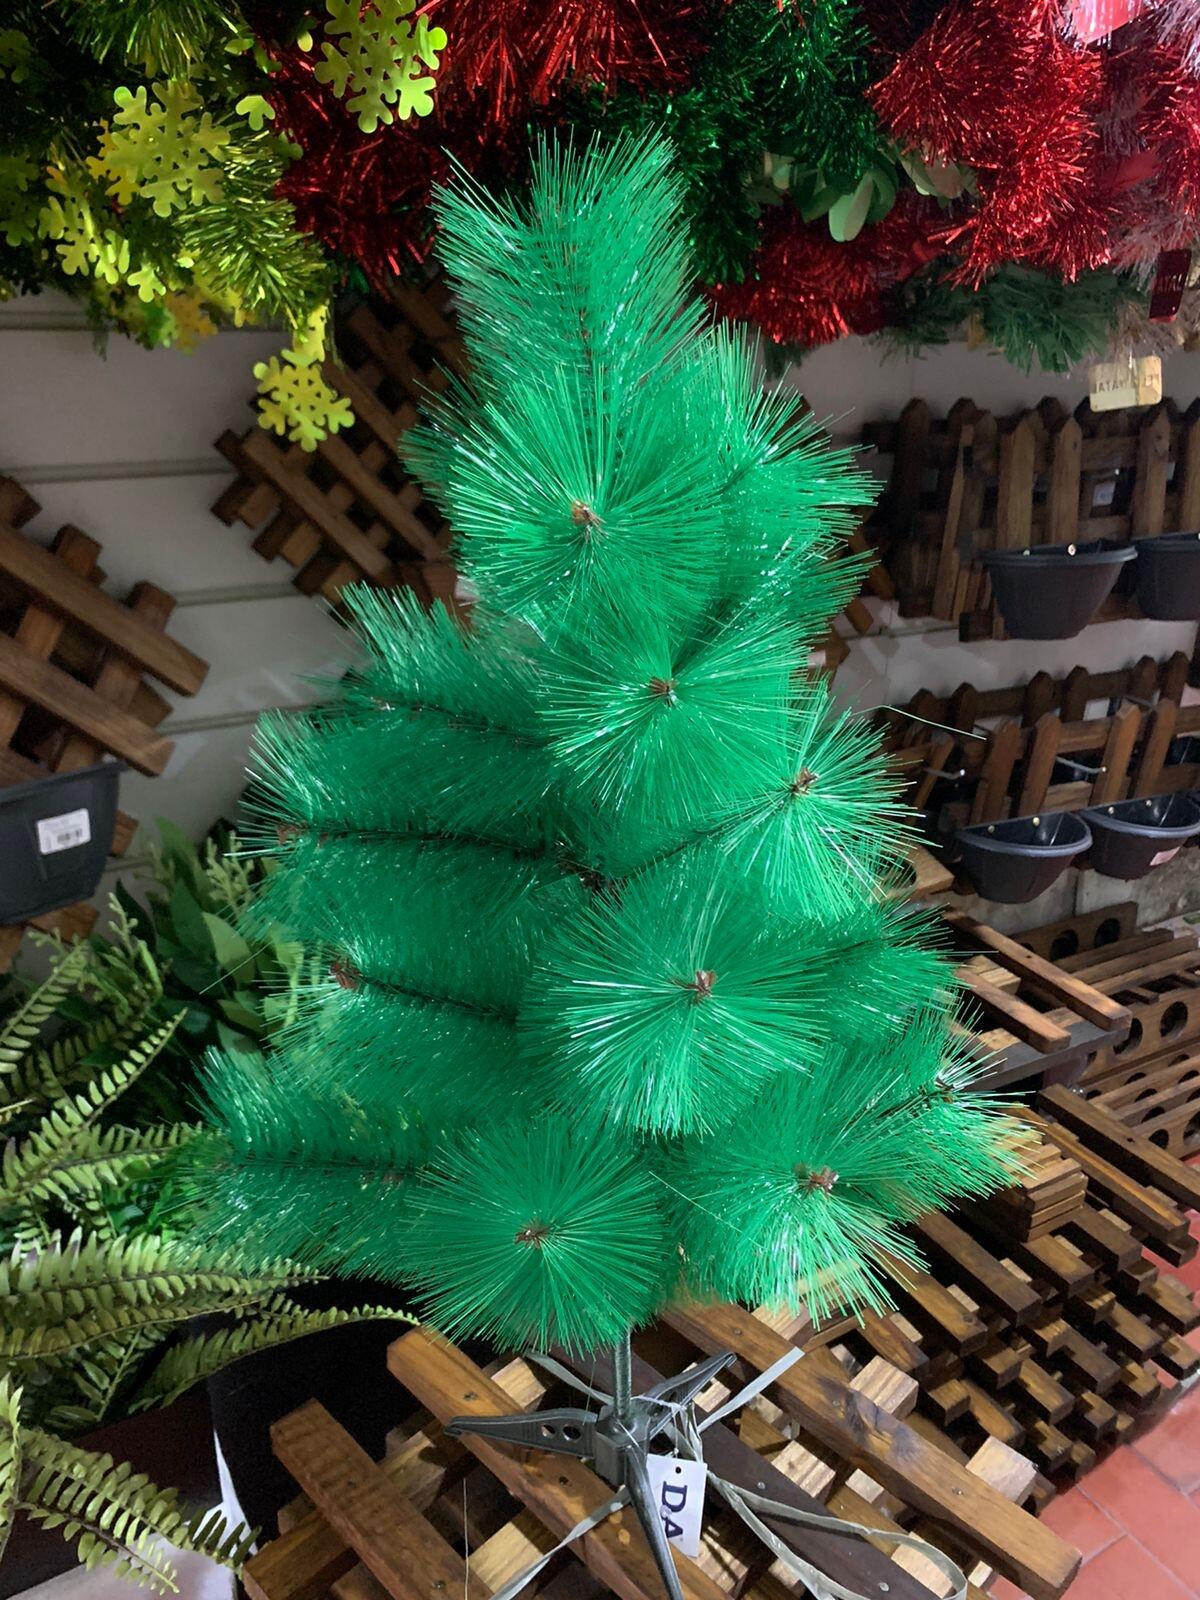 Comprar Árvore De Natal Cactos 60cm 25 Galhos Com Base De Plastico - Verde  - R$54,99 - Casa Bonita Utilidades | Montes Claros